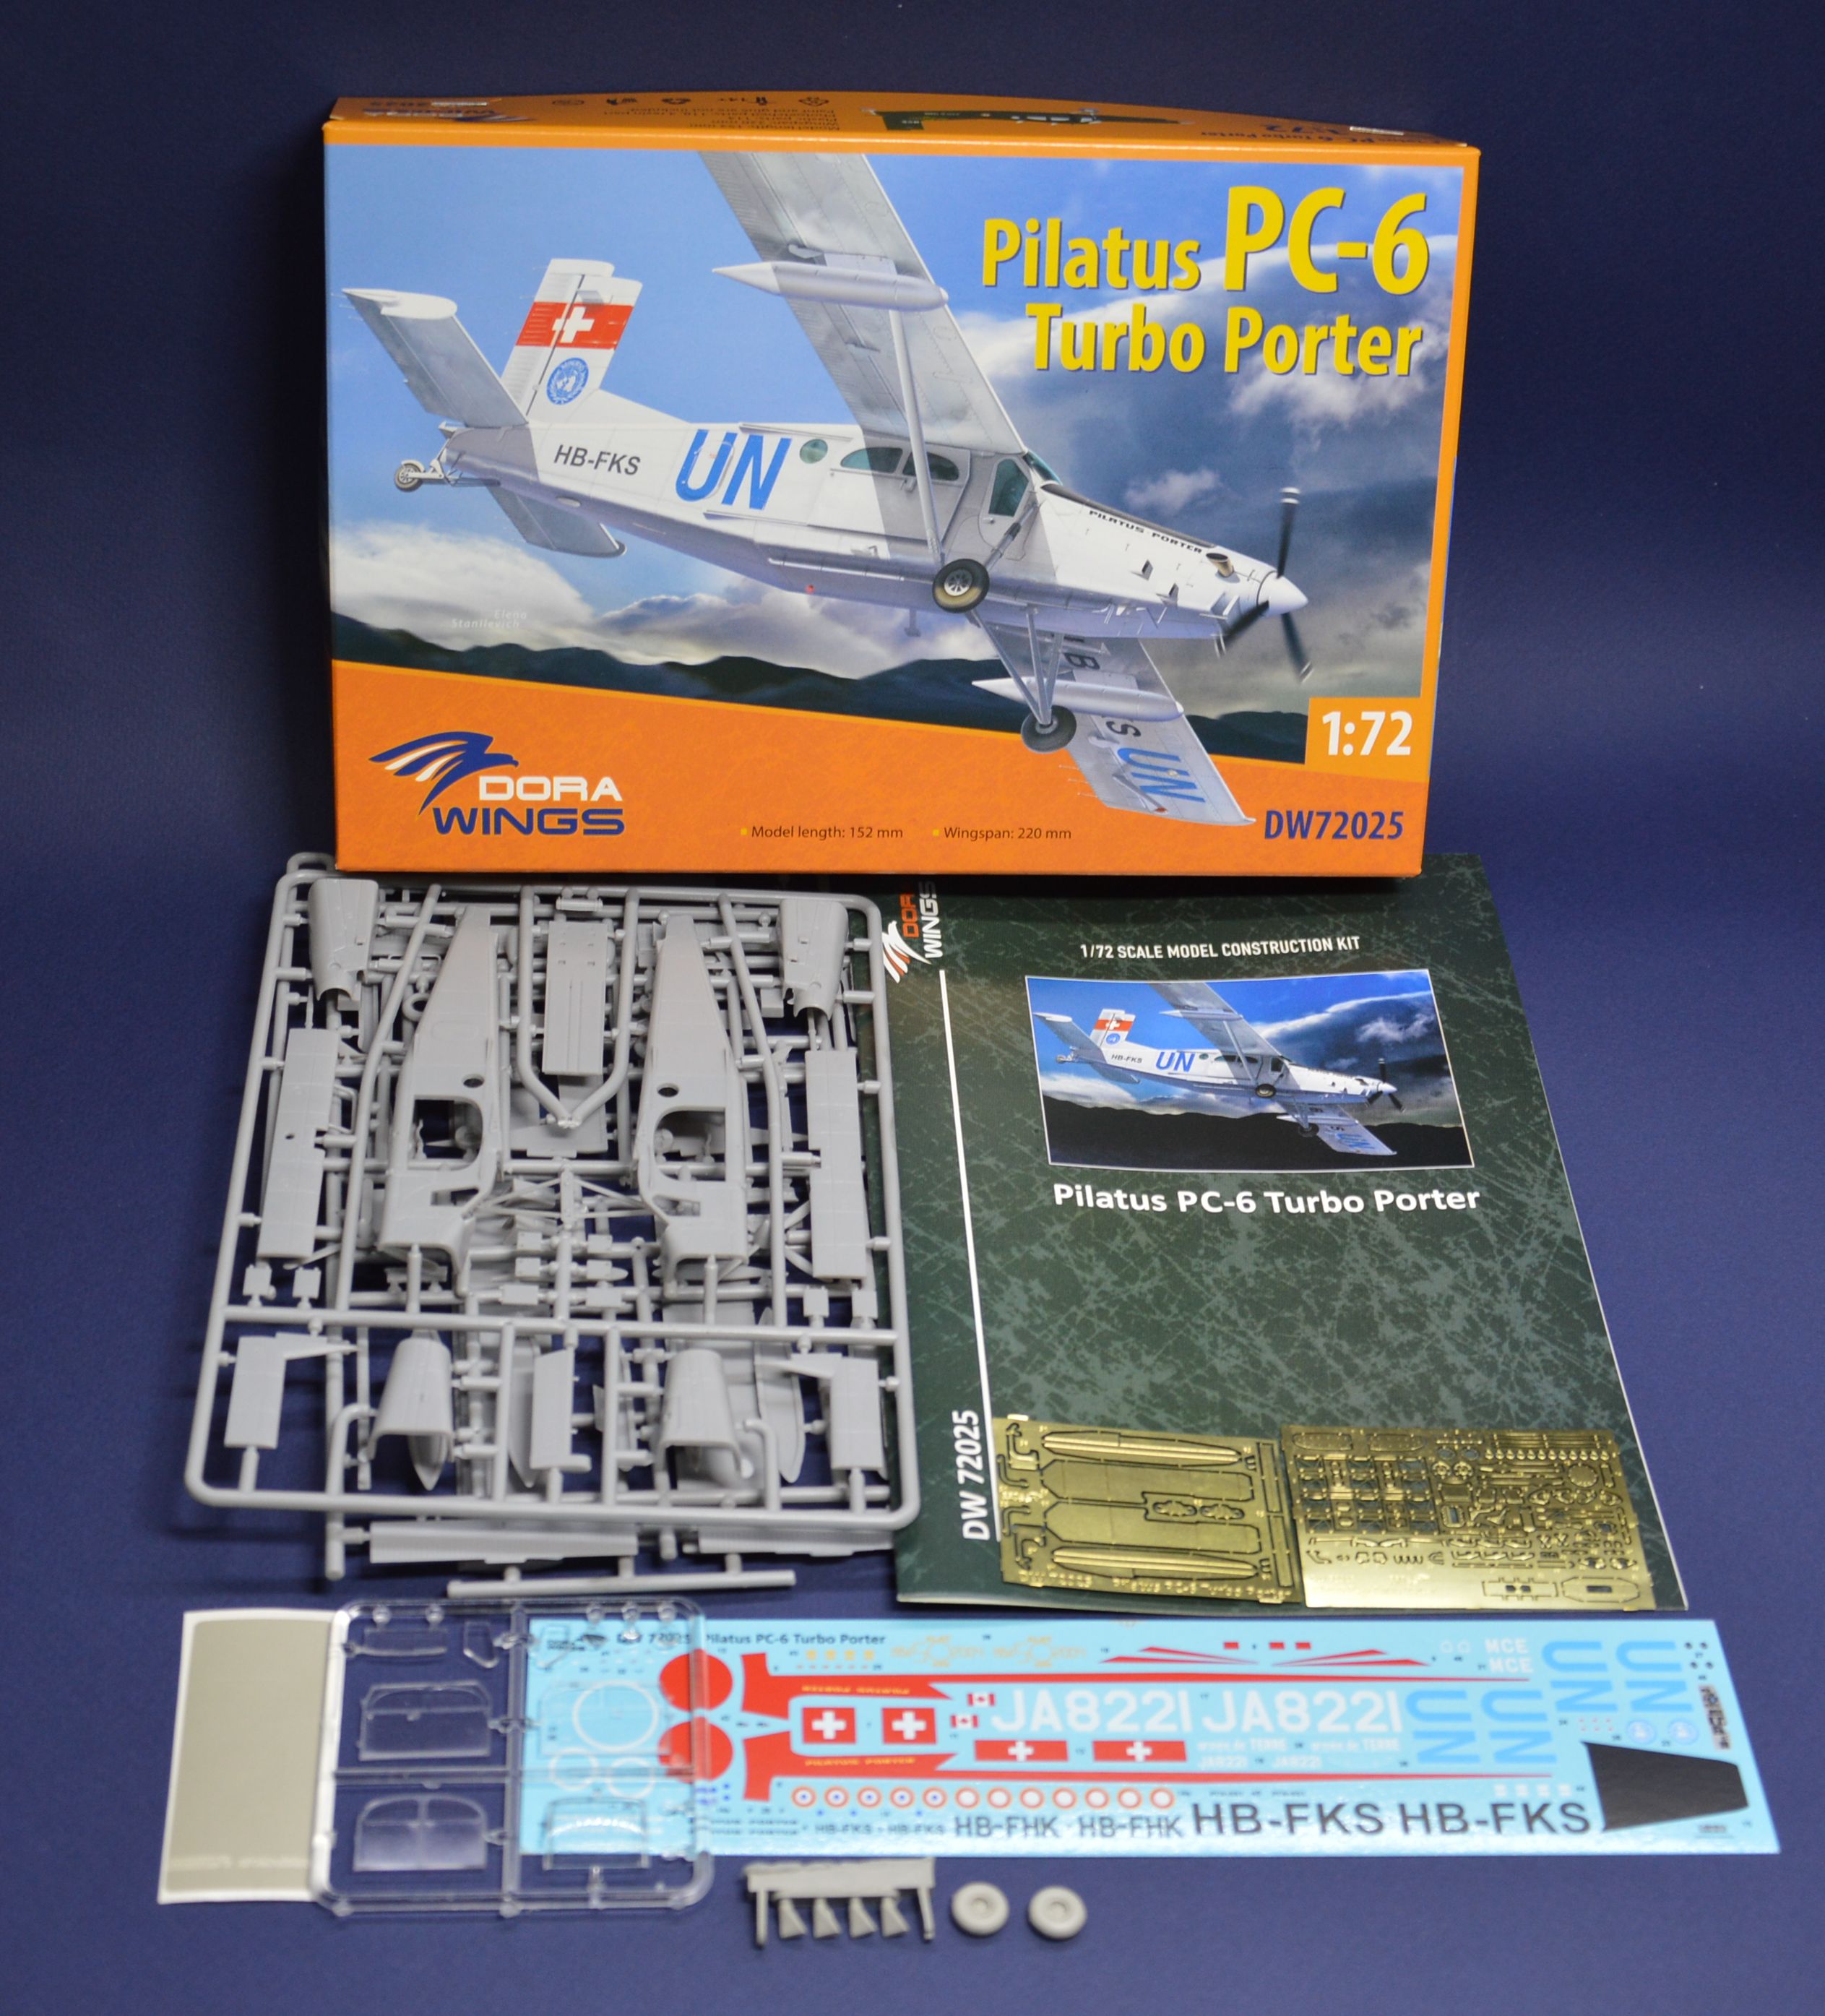 Pilatus PC-6 Turbo Porter (DW72025)